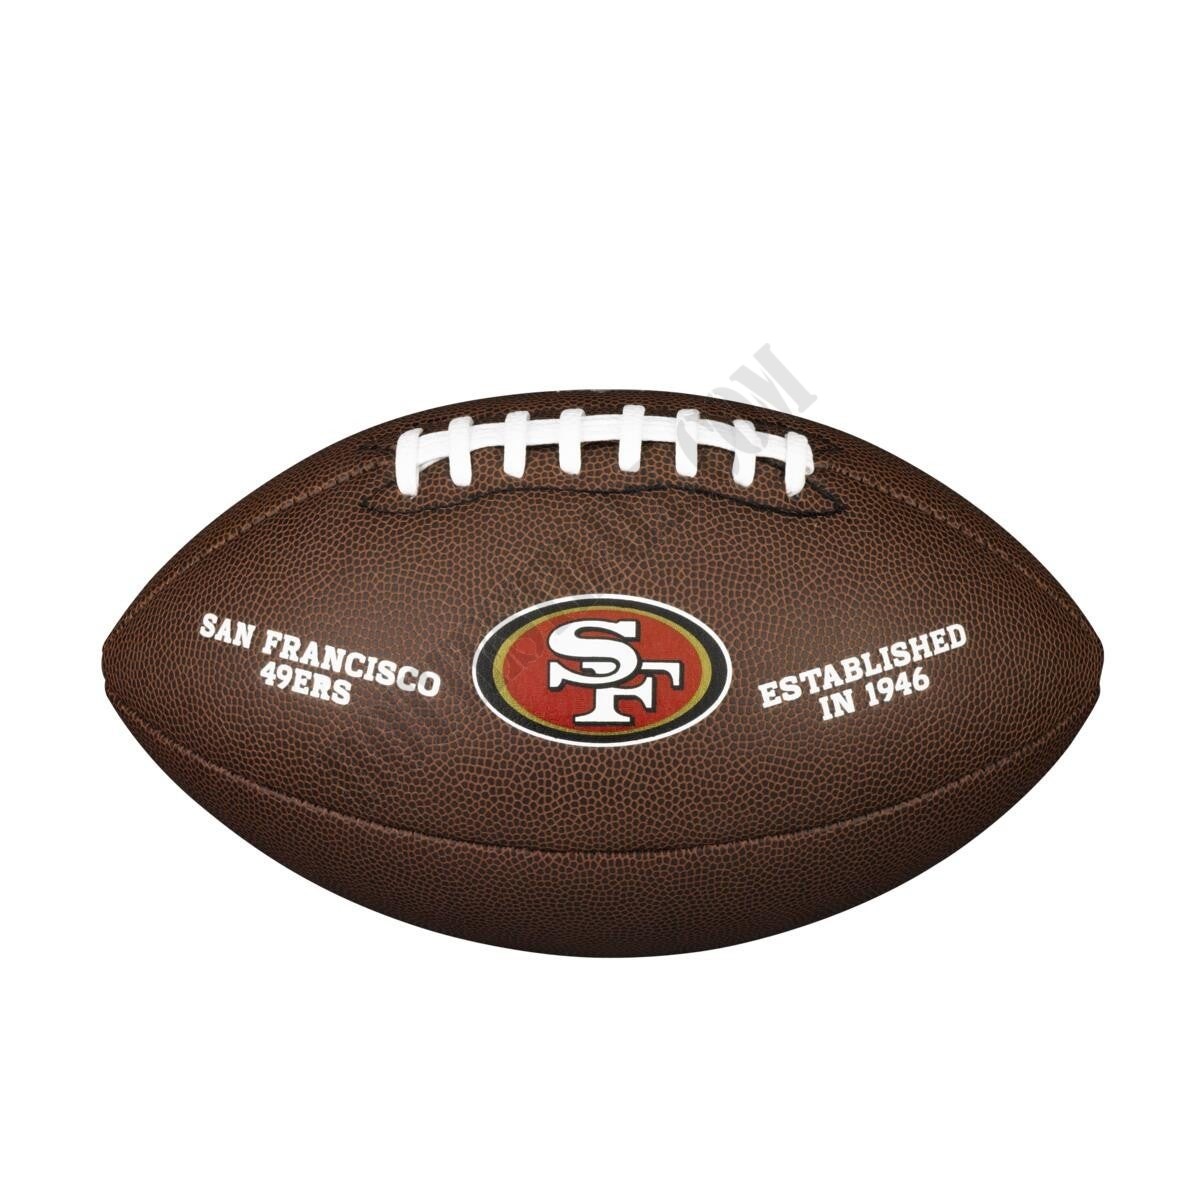 NFL Backyard Legend Football - San Francisco 49ers ● Wilson Promotions - NFL Backyard Legend Football - San Francisco 49ers ● Wilson Promotions